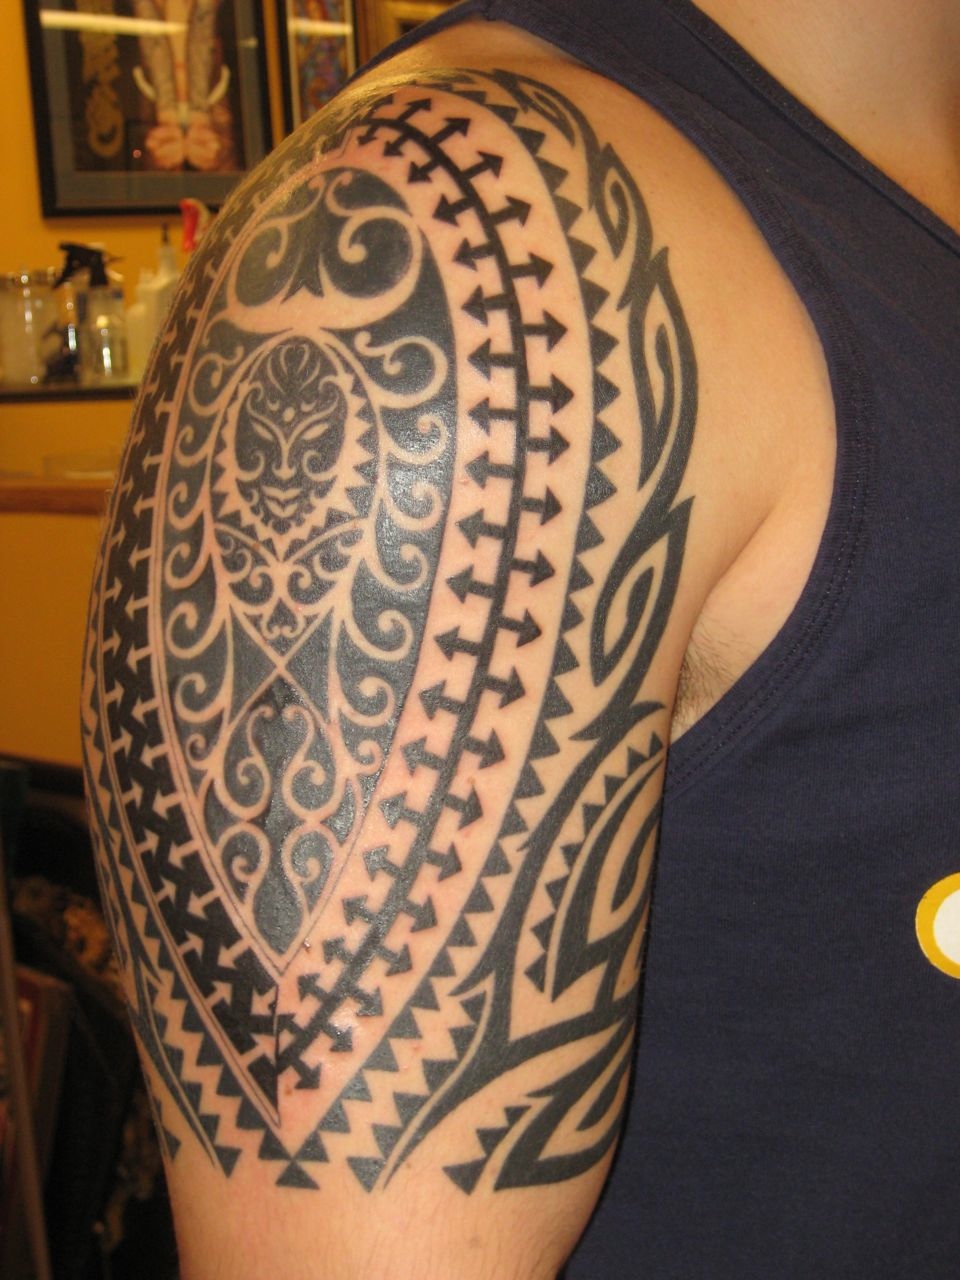 Amazon.com : 4 Pack Stick on black temporary tattoo maui tribal body art  sticker transfer for arms shoulder aztec polynesian samoan hawaiian for  adult men and women (4 x all tribal tattoo